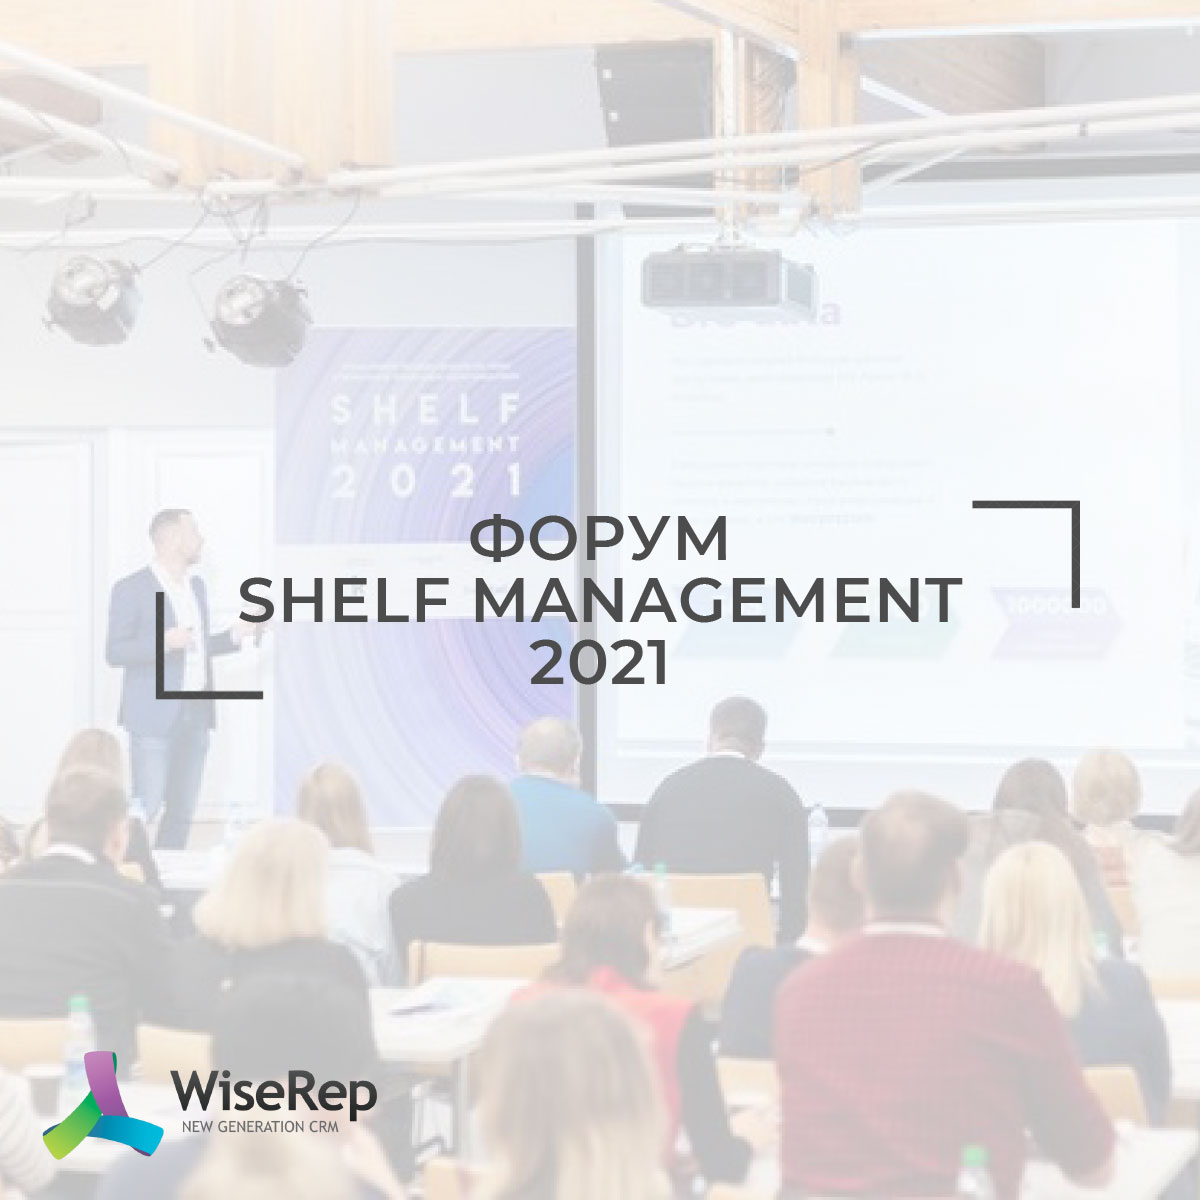 Shelf Management 2021 в Минске 27 ноября